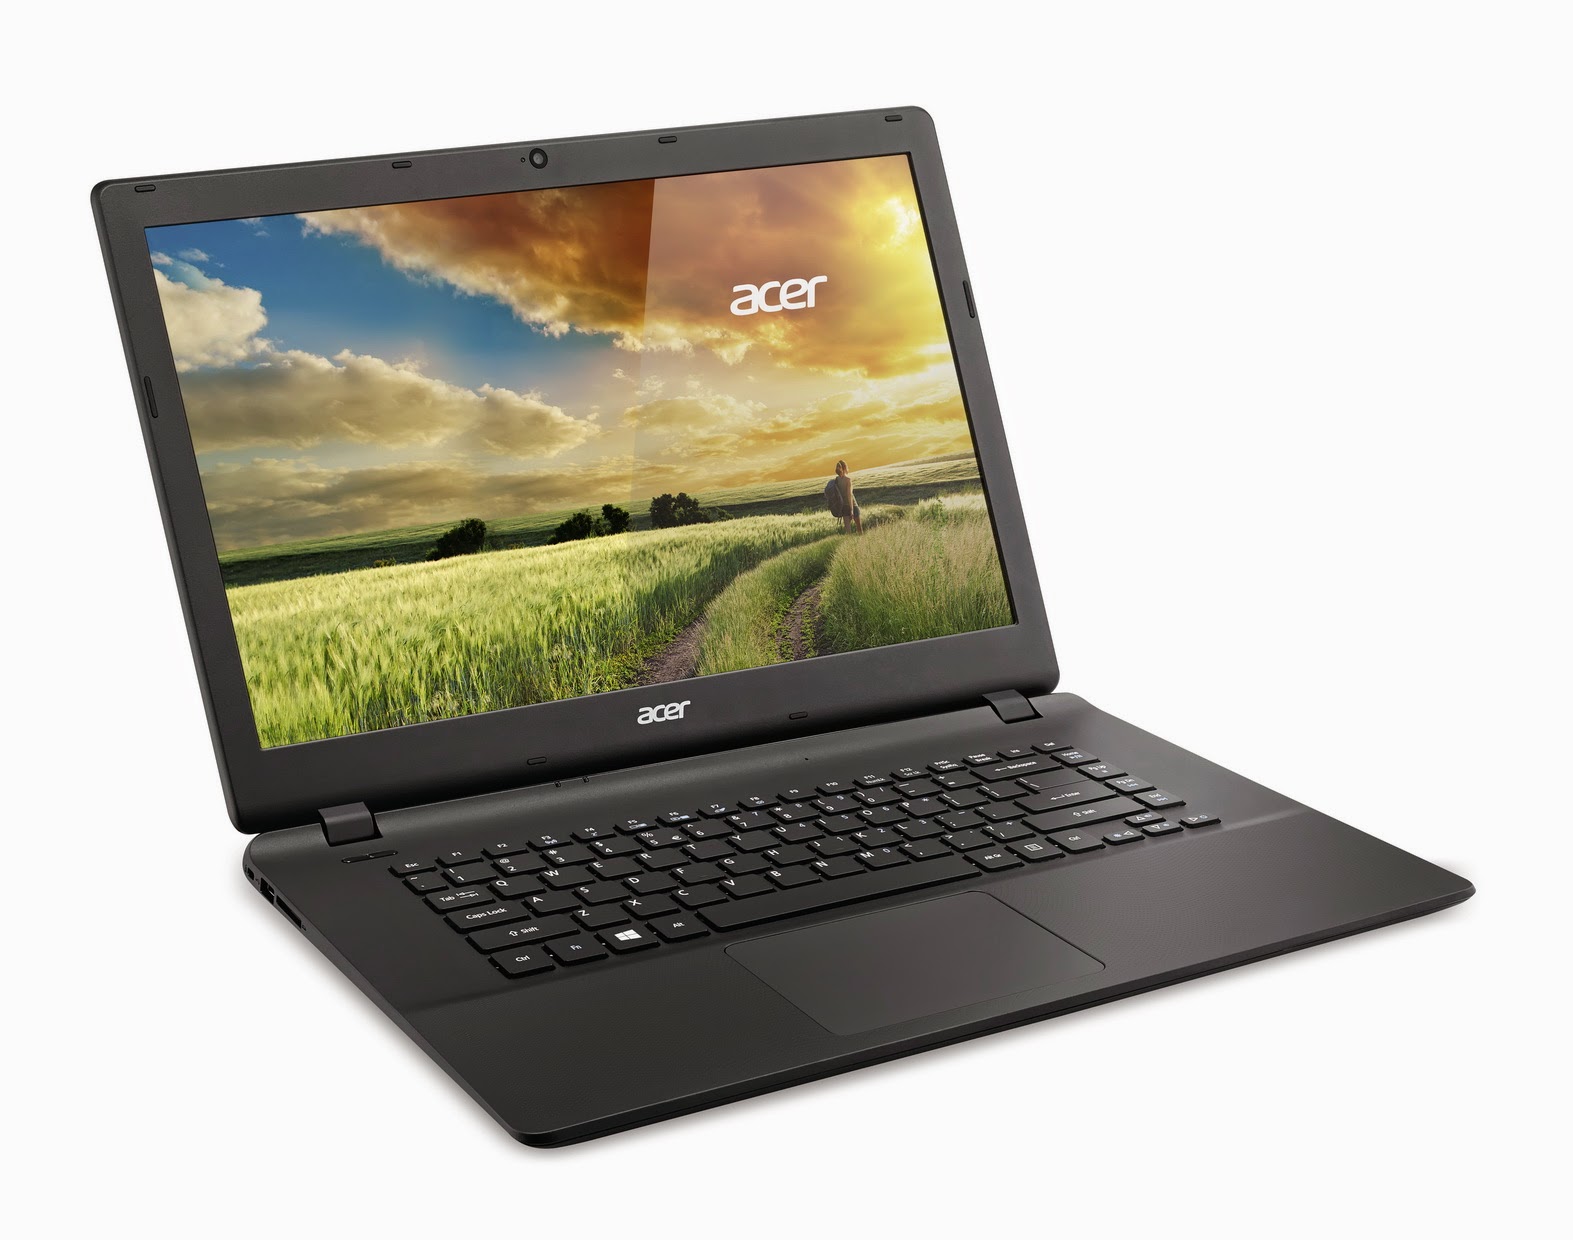 Acer Aspire ES1-511 Drivers Download for Windows 8.1 64-Bit